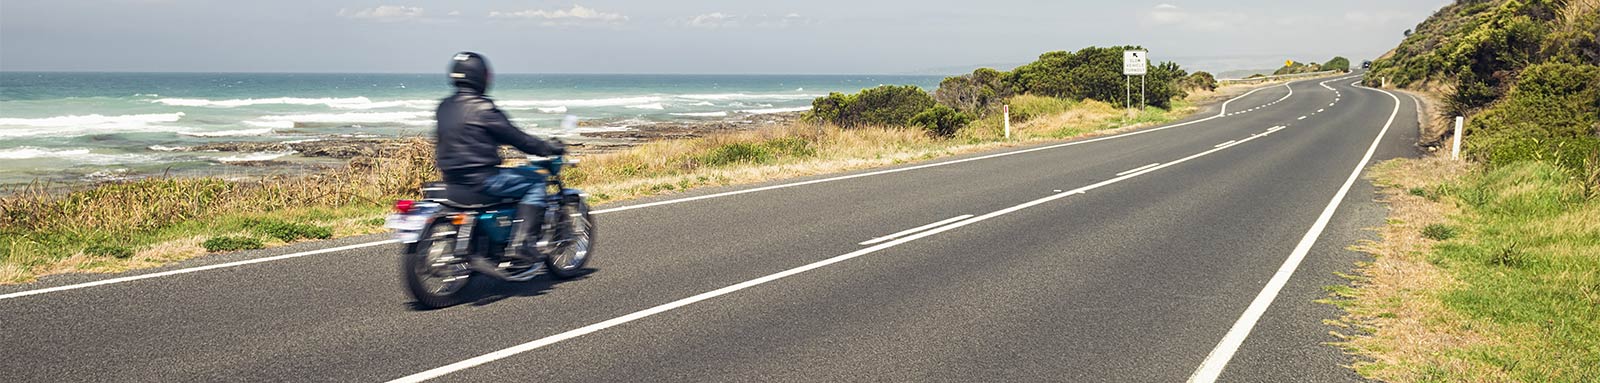 Motorcyclist on a coastal road